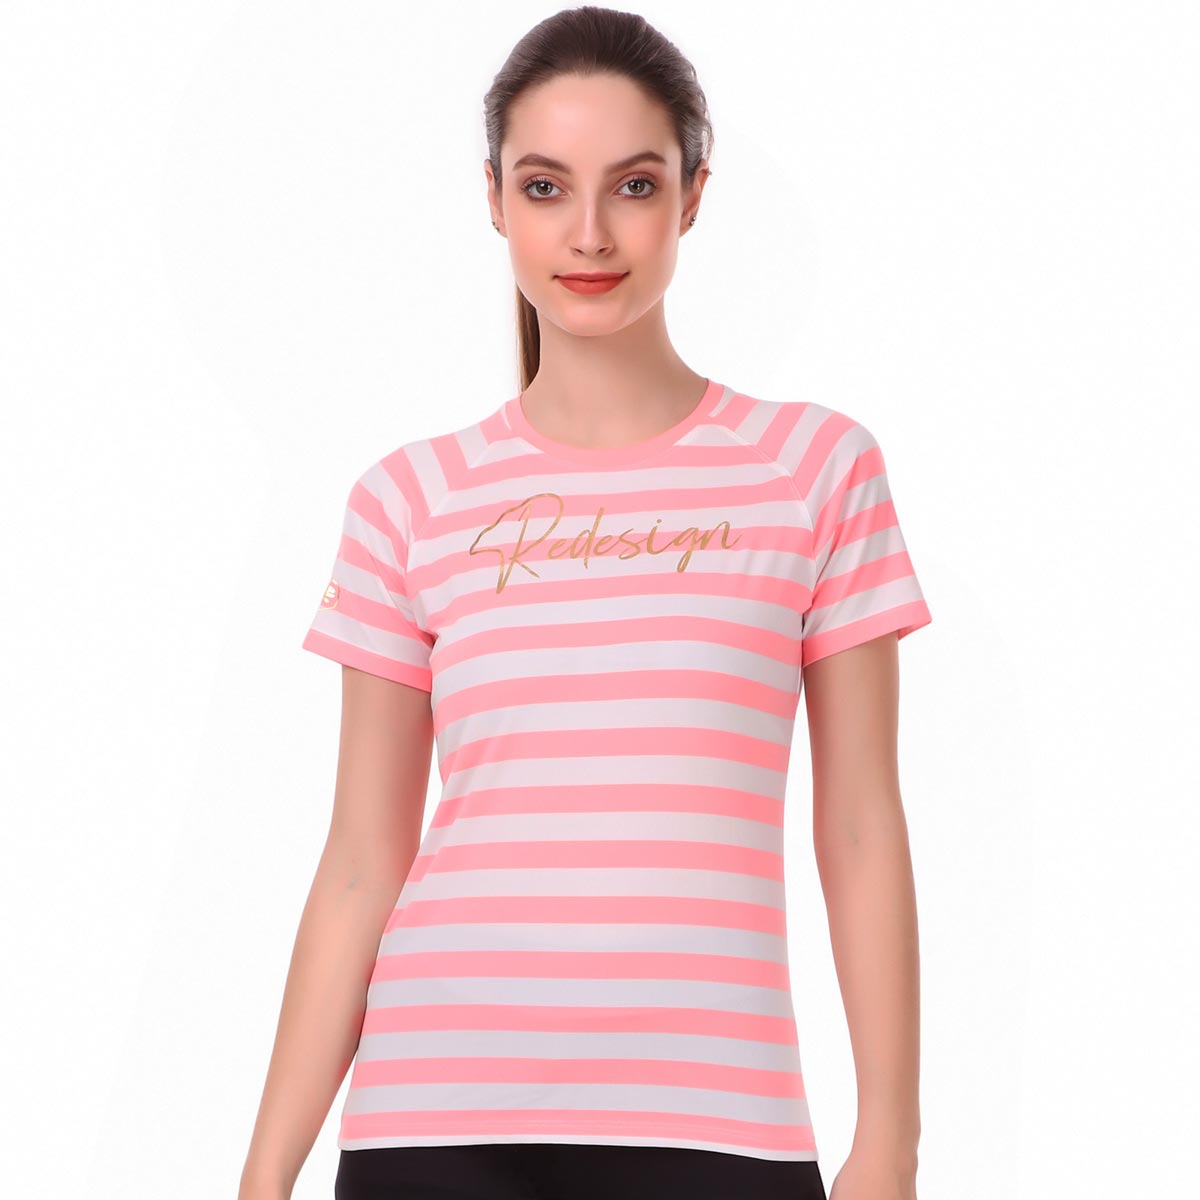 Cotton Stripes Tshirt For Women (Pink)